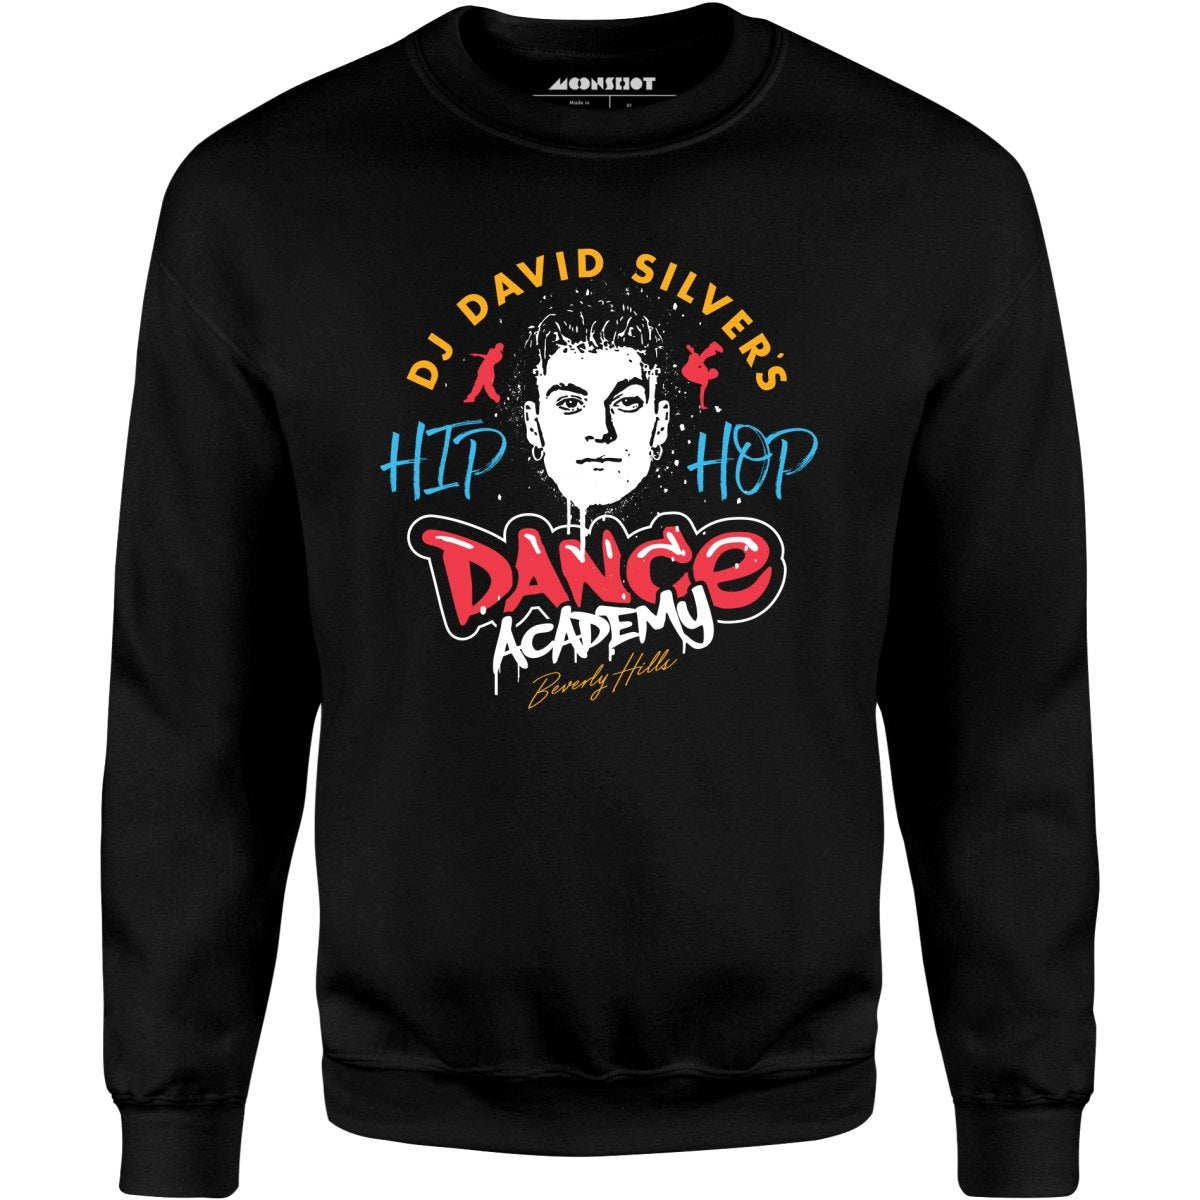 DJ David Silver's Hip Hop Dance Academy - Unisex Sweatshirt